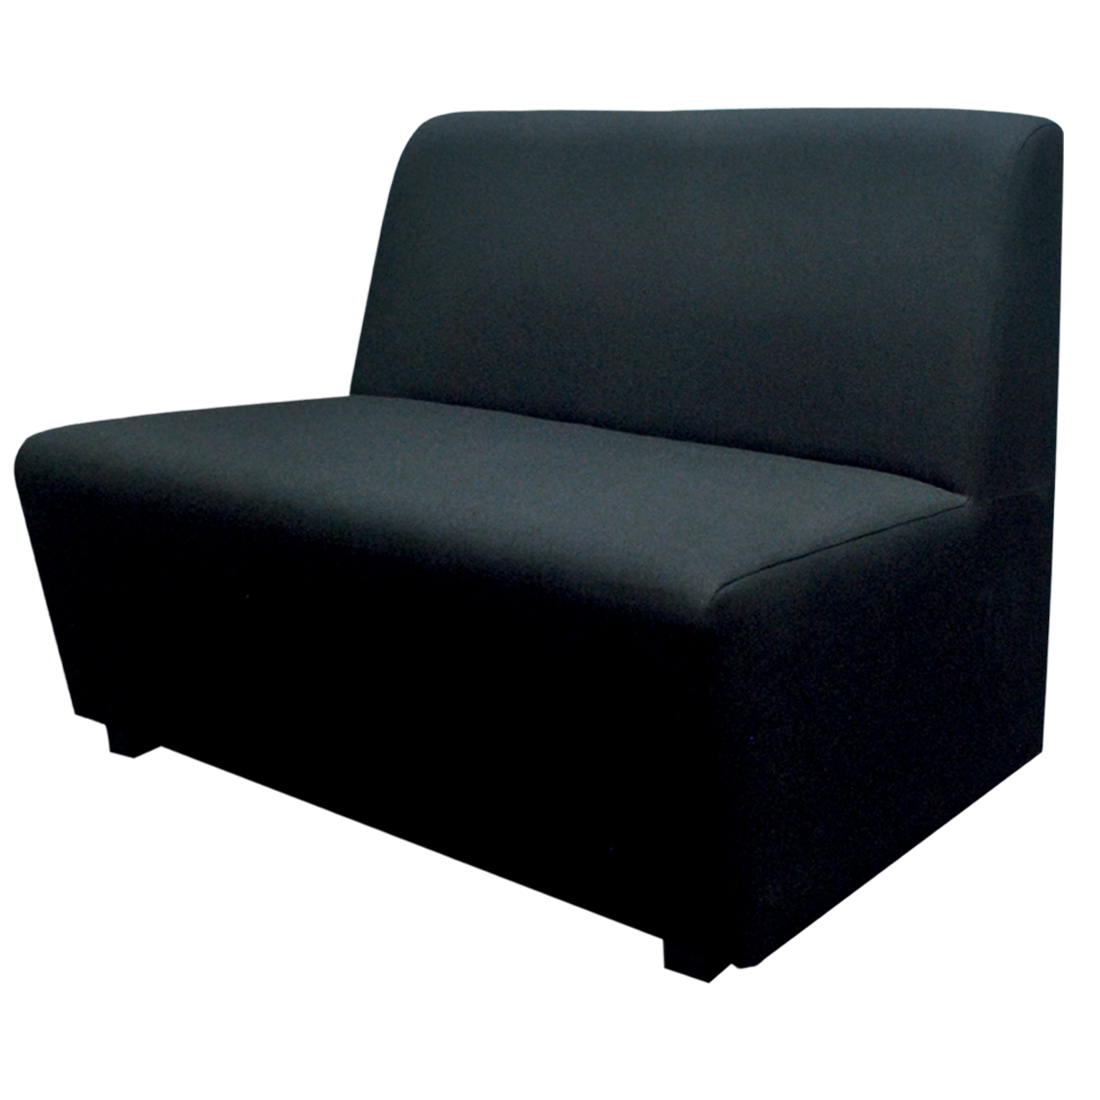 Box Type Double Lobby Chair LBC02 - Black